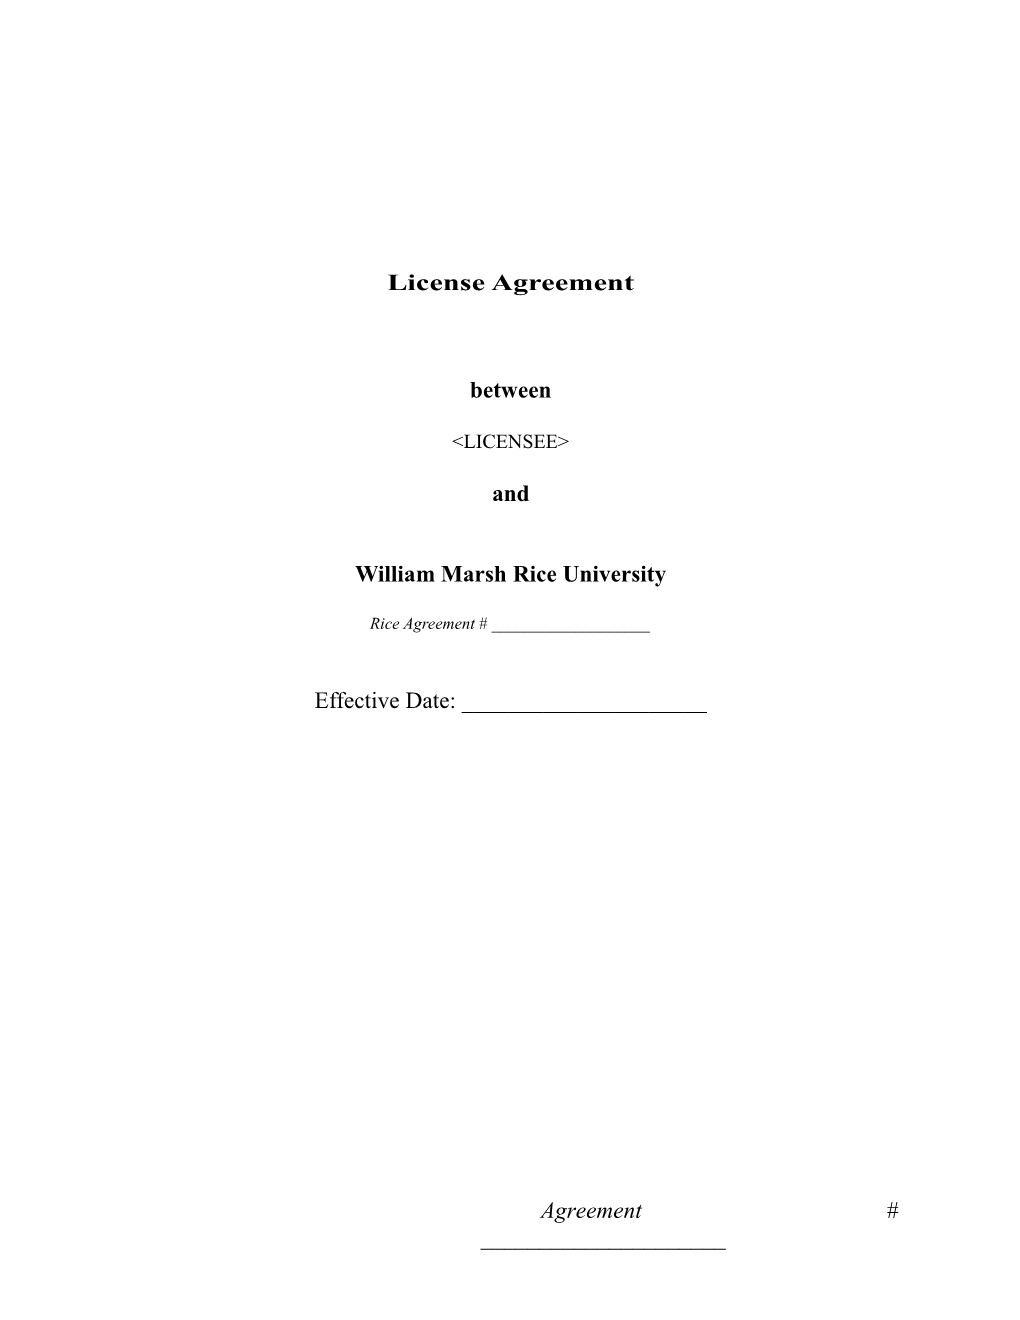 License Agreement s1